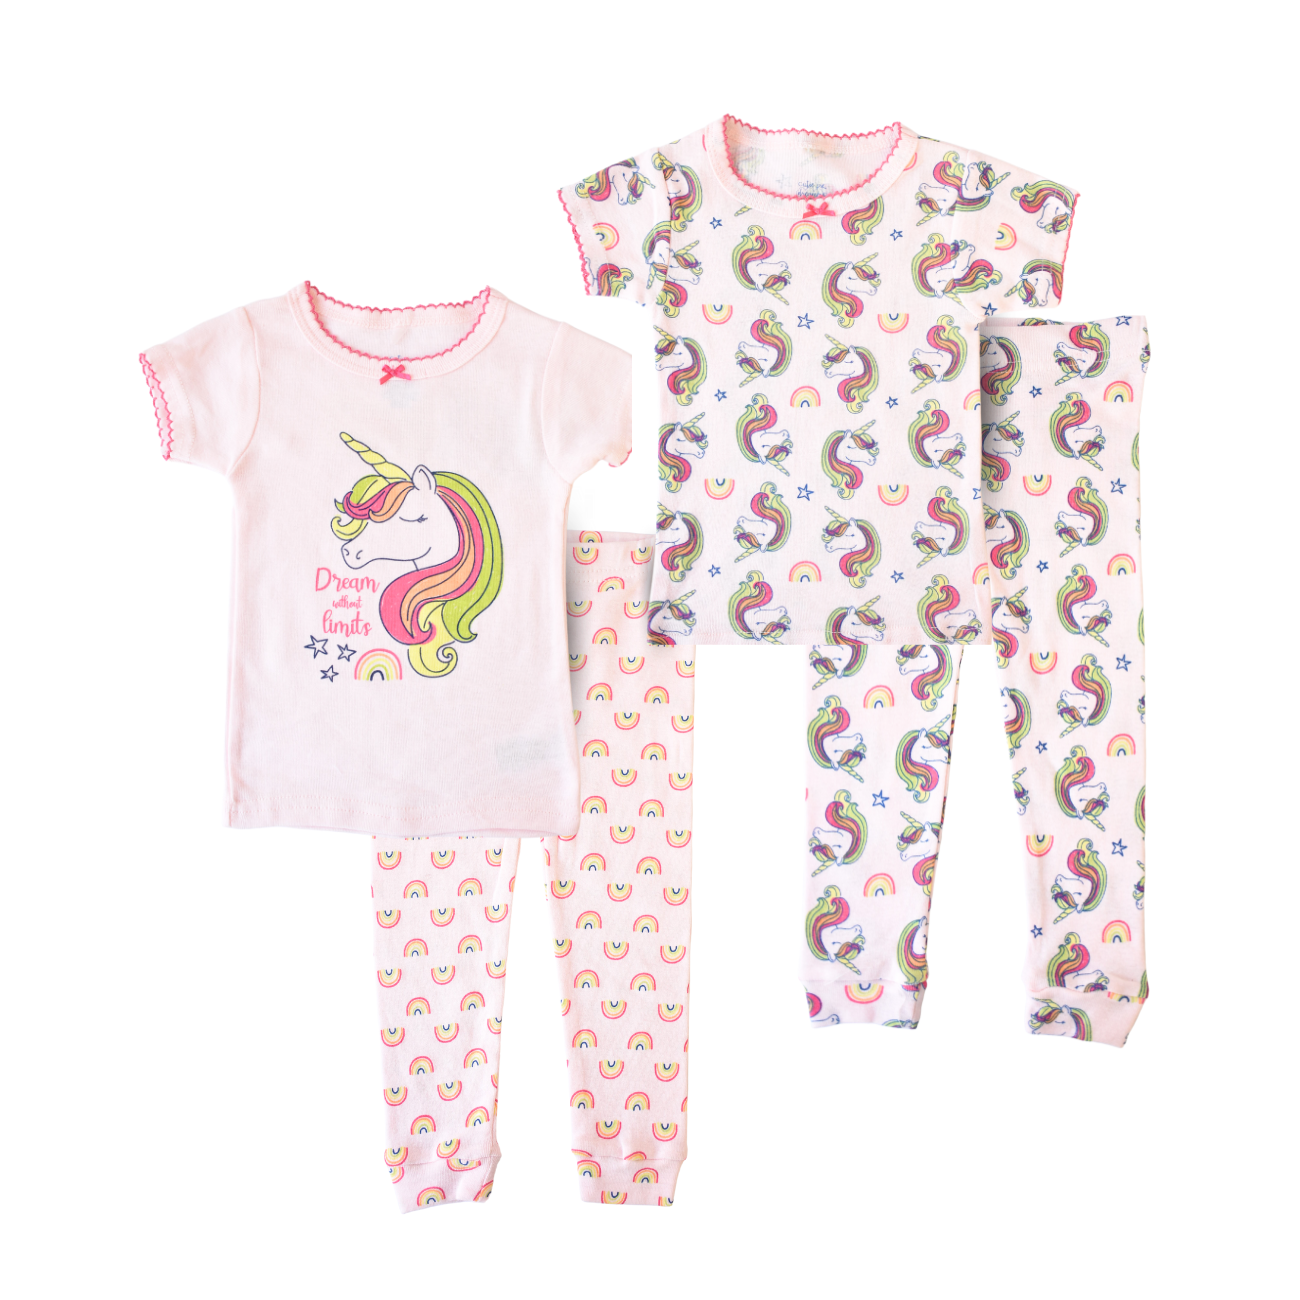 Cutie Pie Set de 2 pijamas estampado unicornio rosado